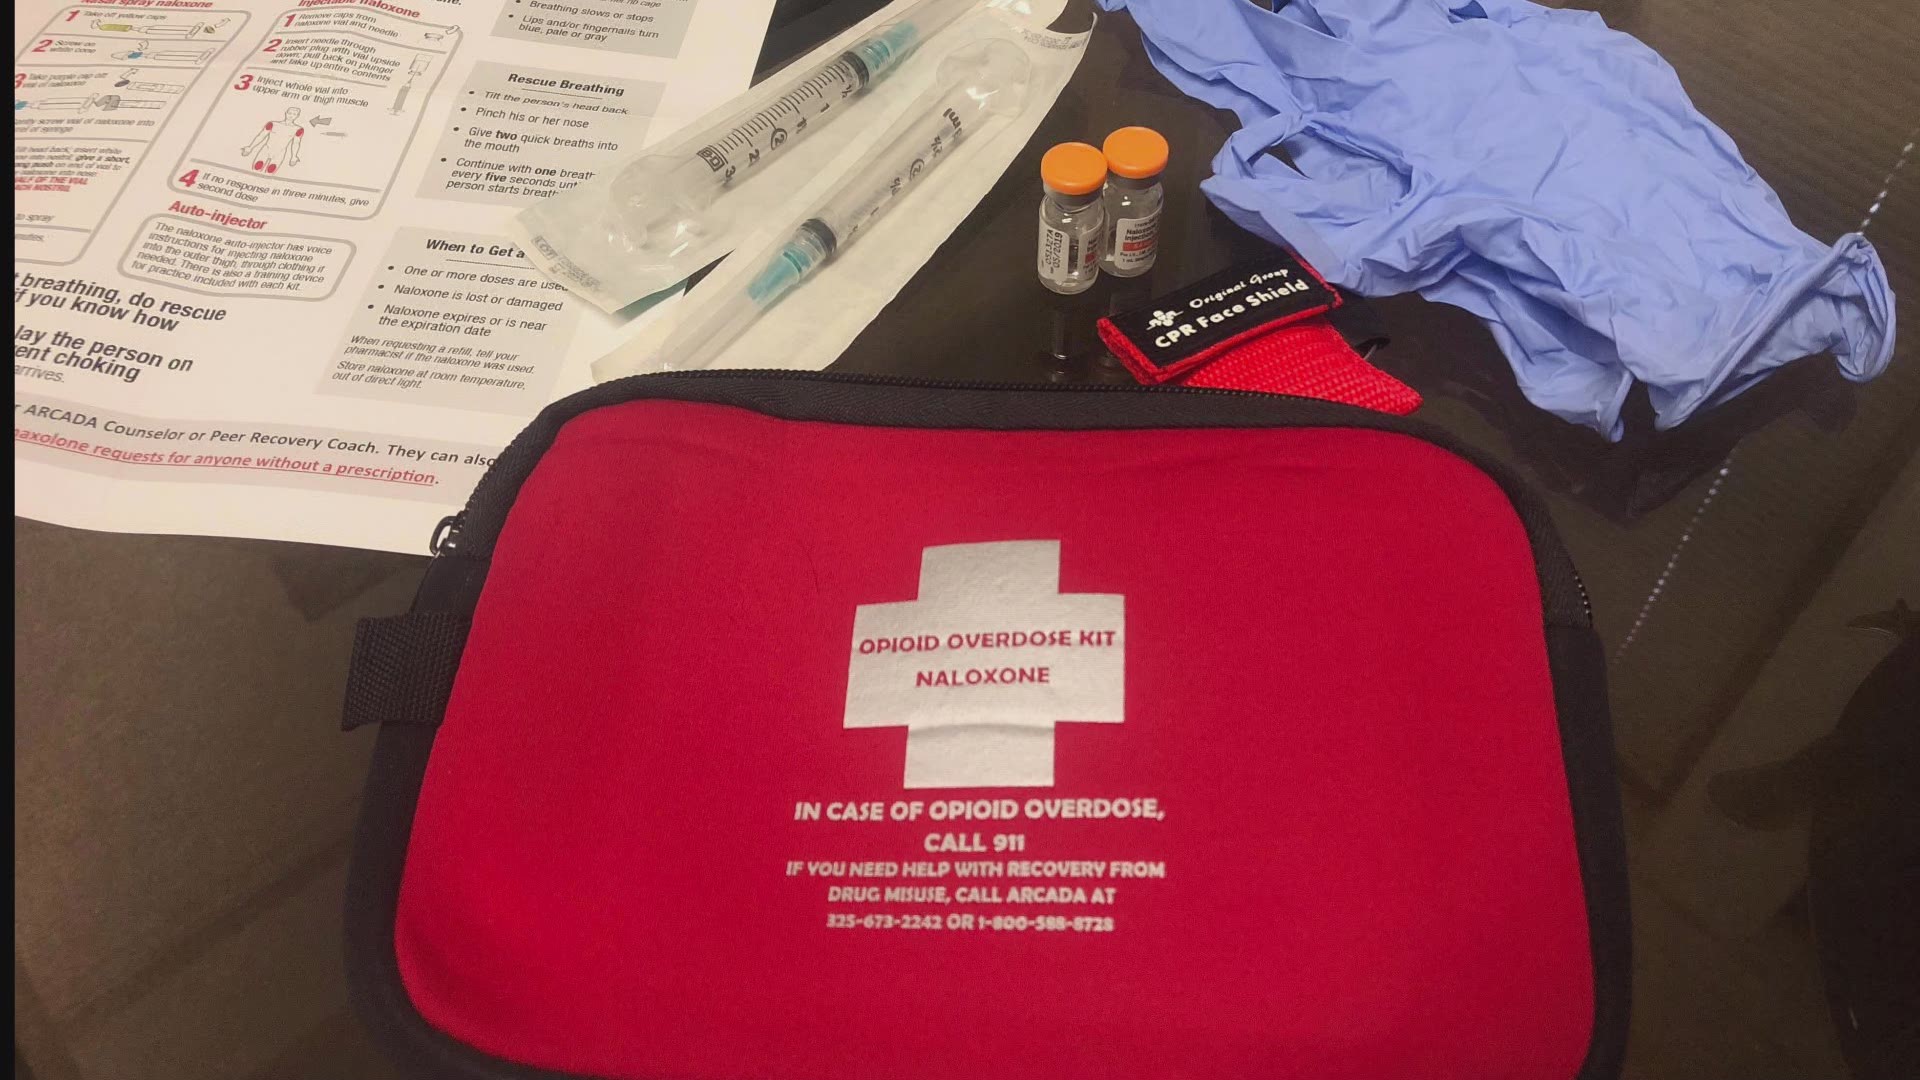 NARCAN kits combat opioid overdoses.